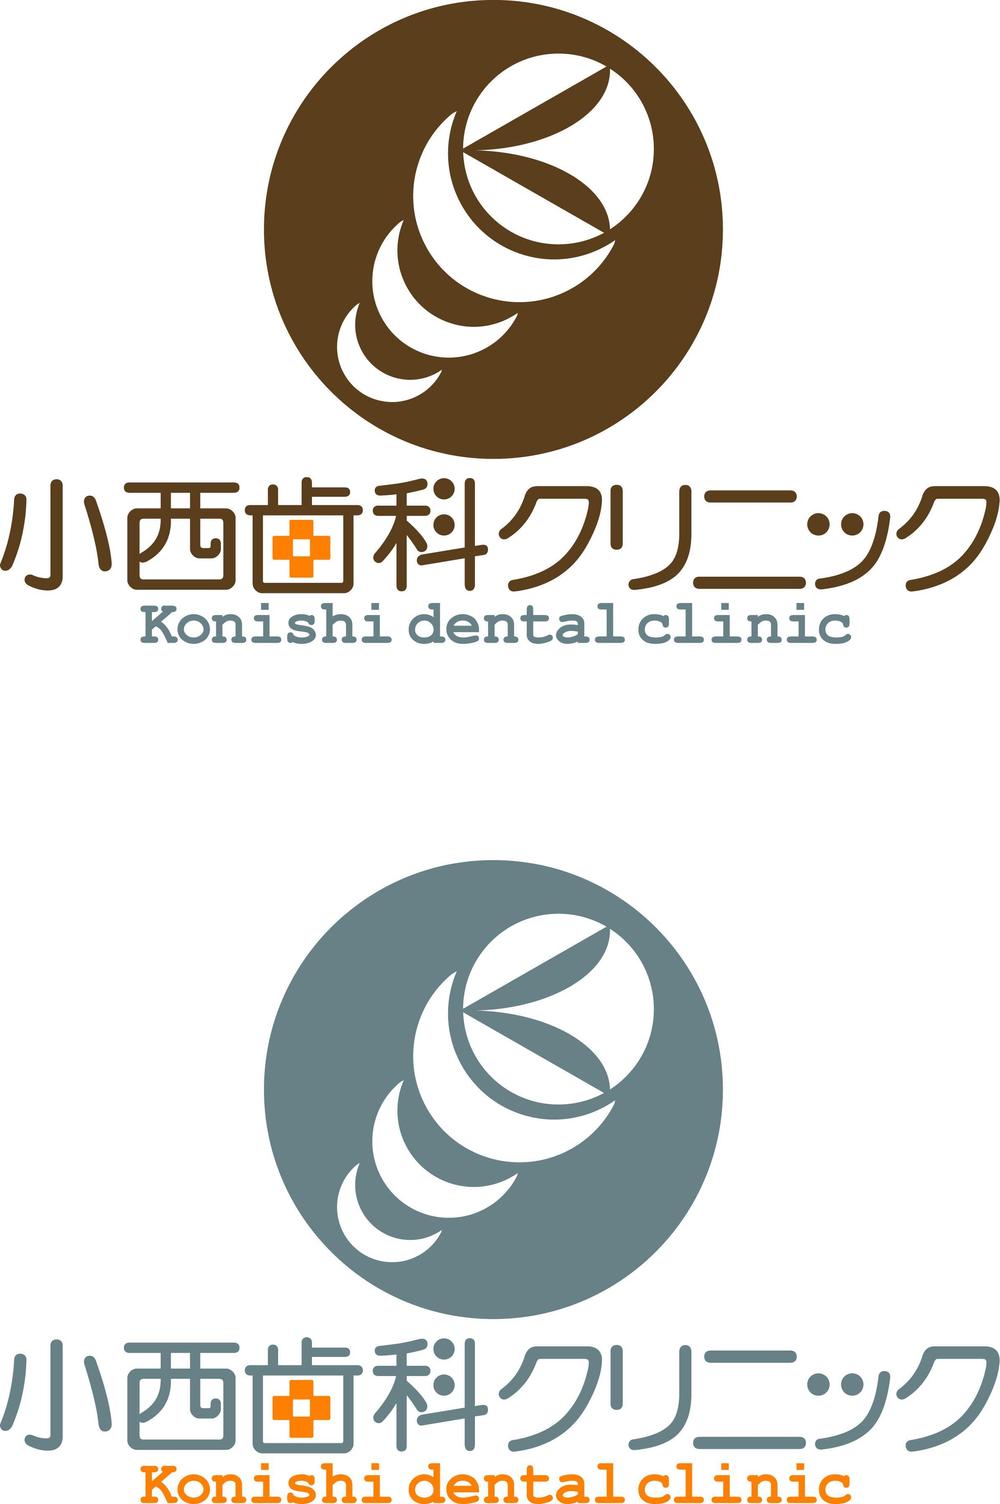 Konishi dental clinic_COLOR.jpg